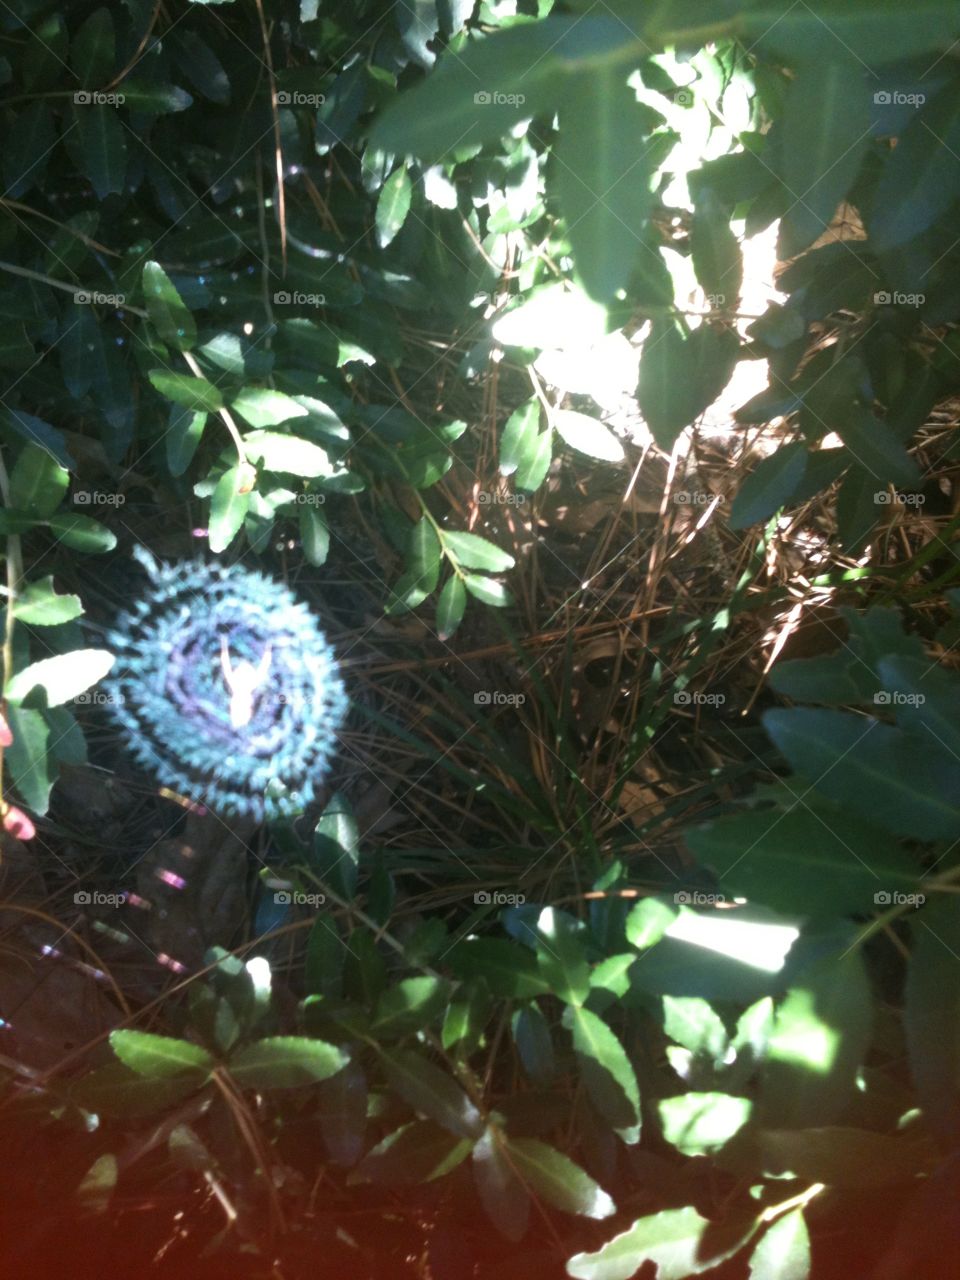 Marvelous spider web spun on a bush